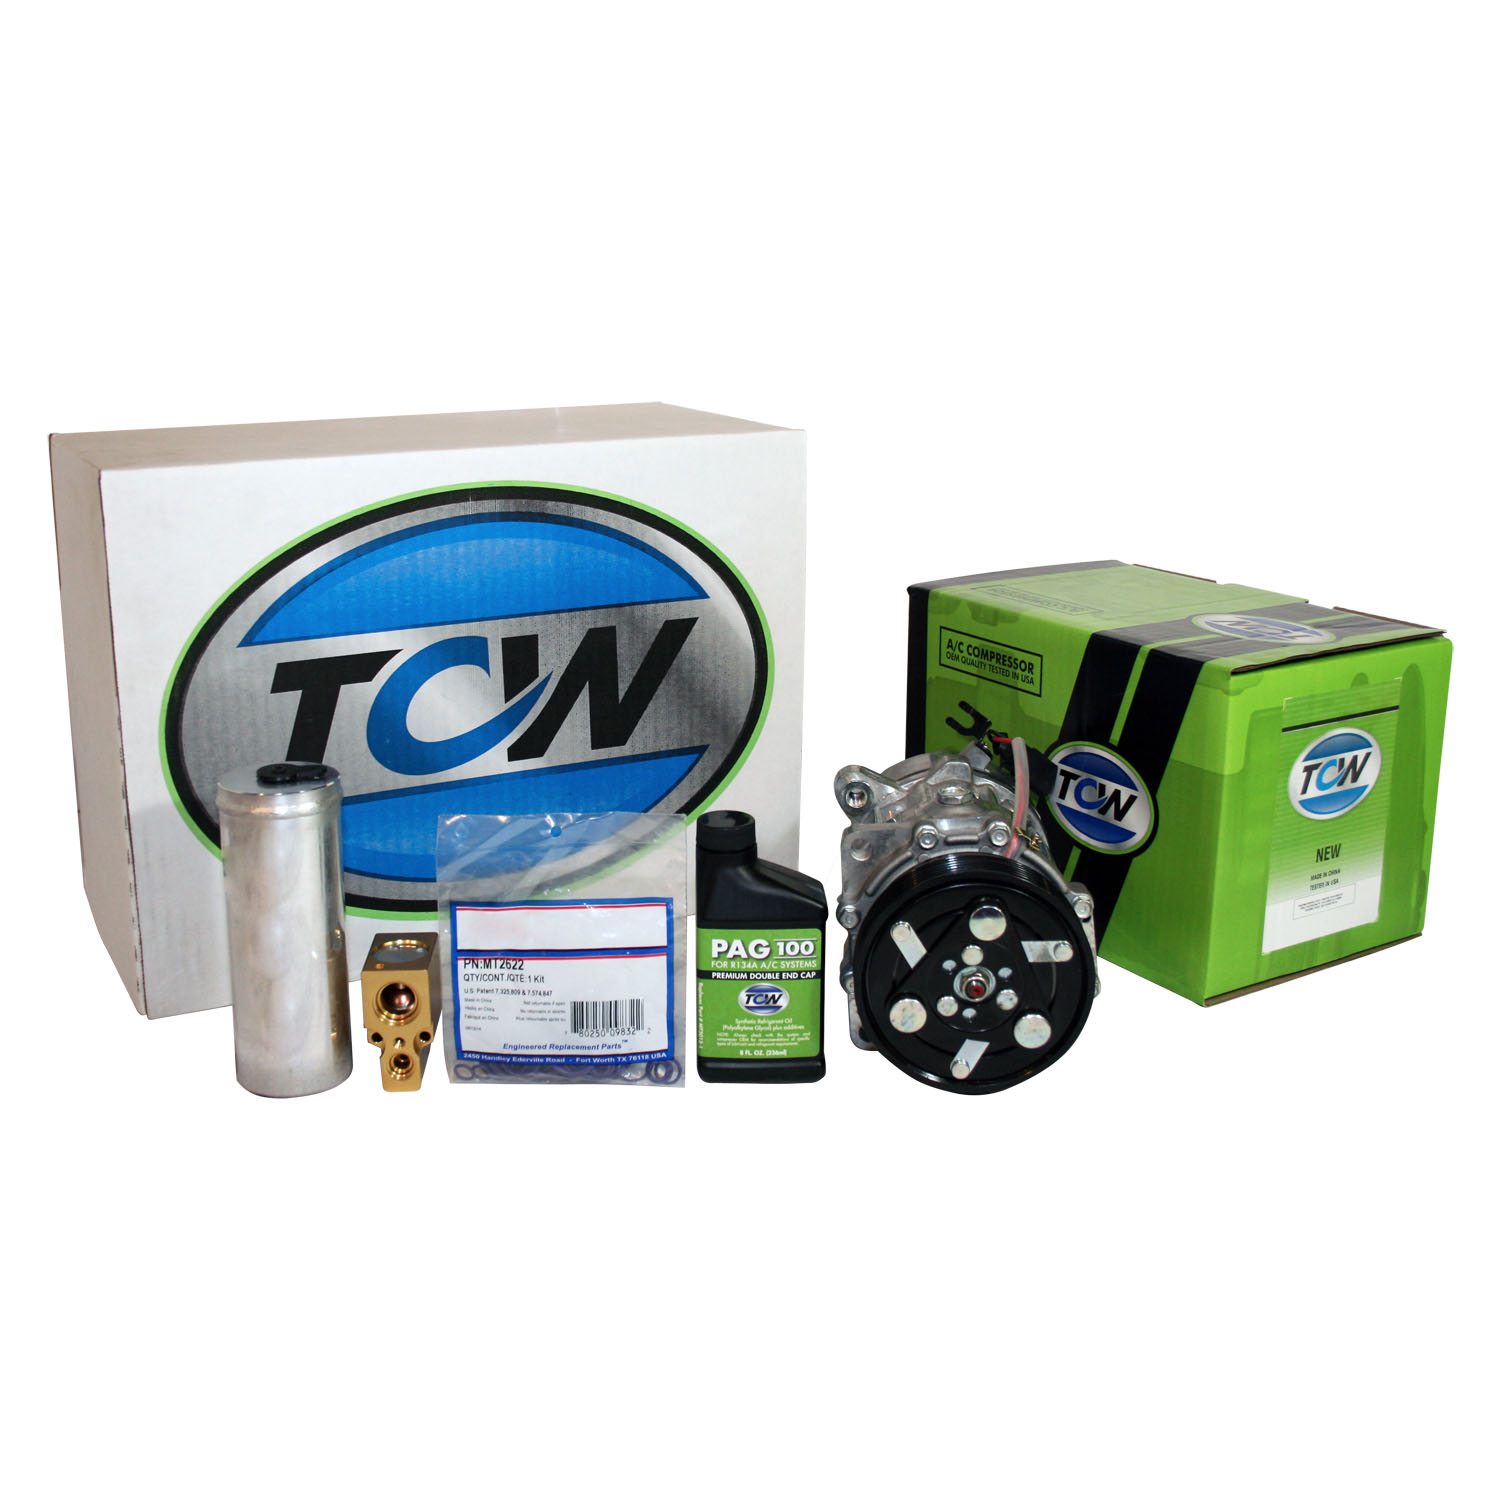 TCW Vehicle A/C Kit K1000275N New Product Image field_60b6a13a6e67c